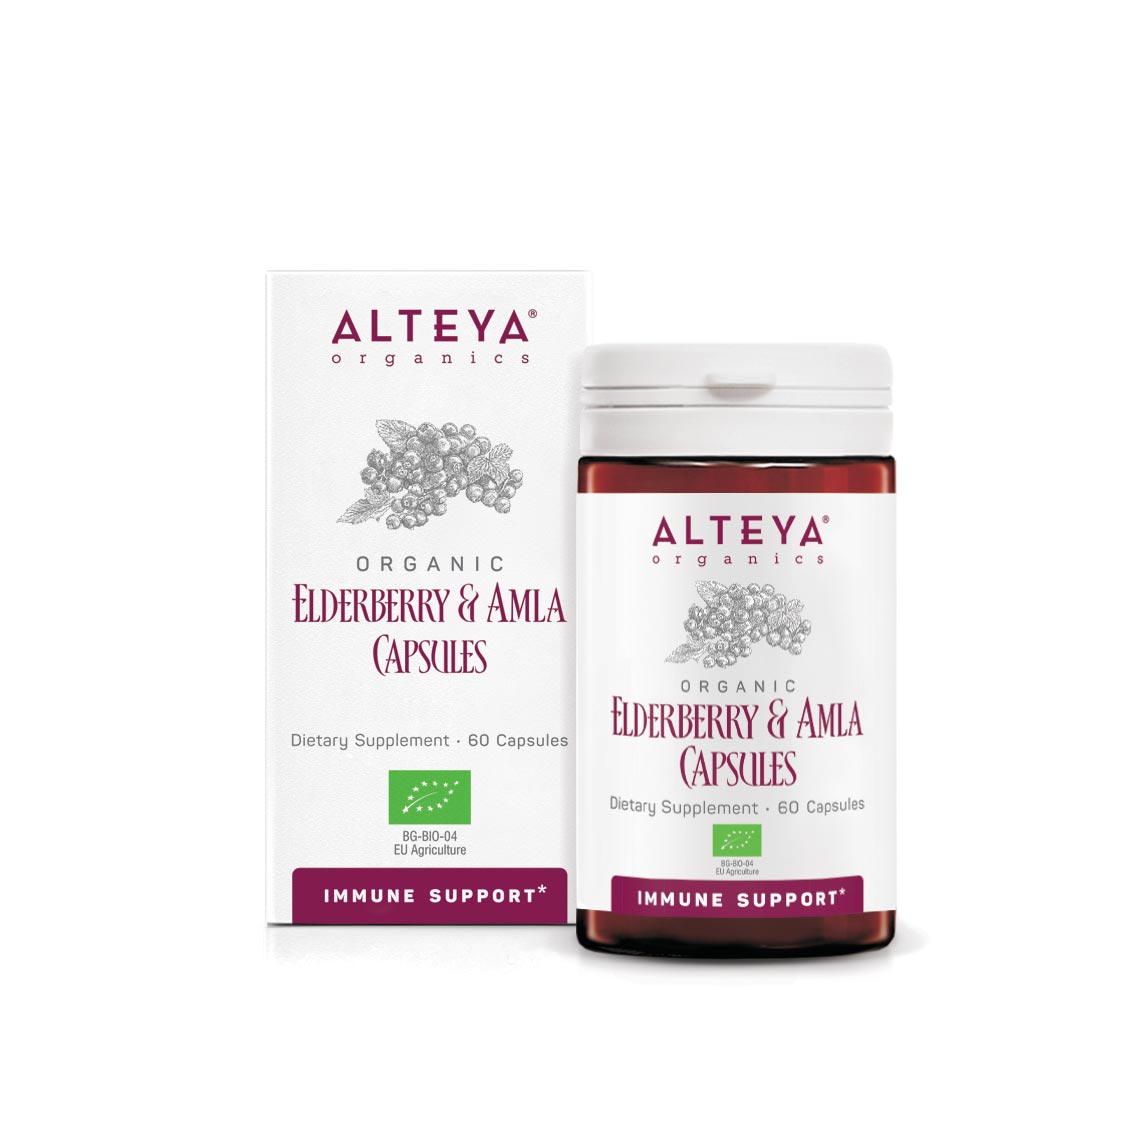 Alteya Organics organic elderberry & amla capsules offer immunity benefits.